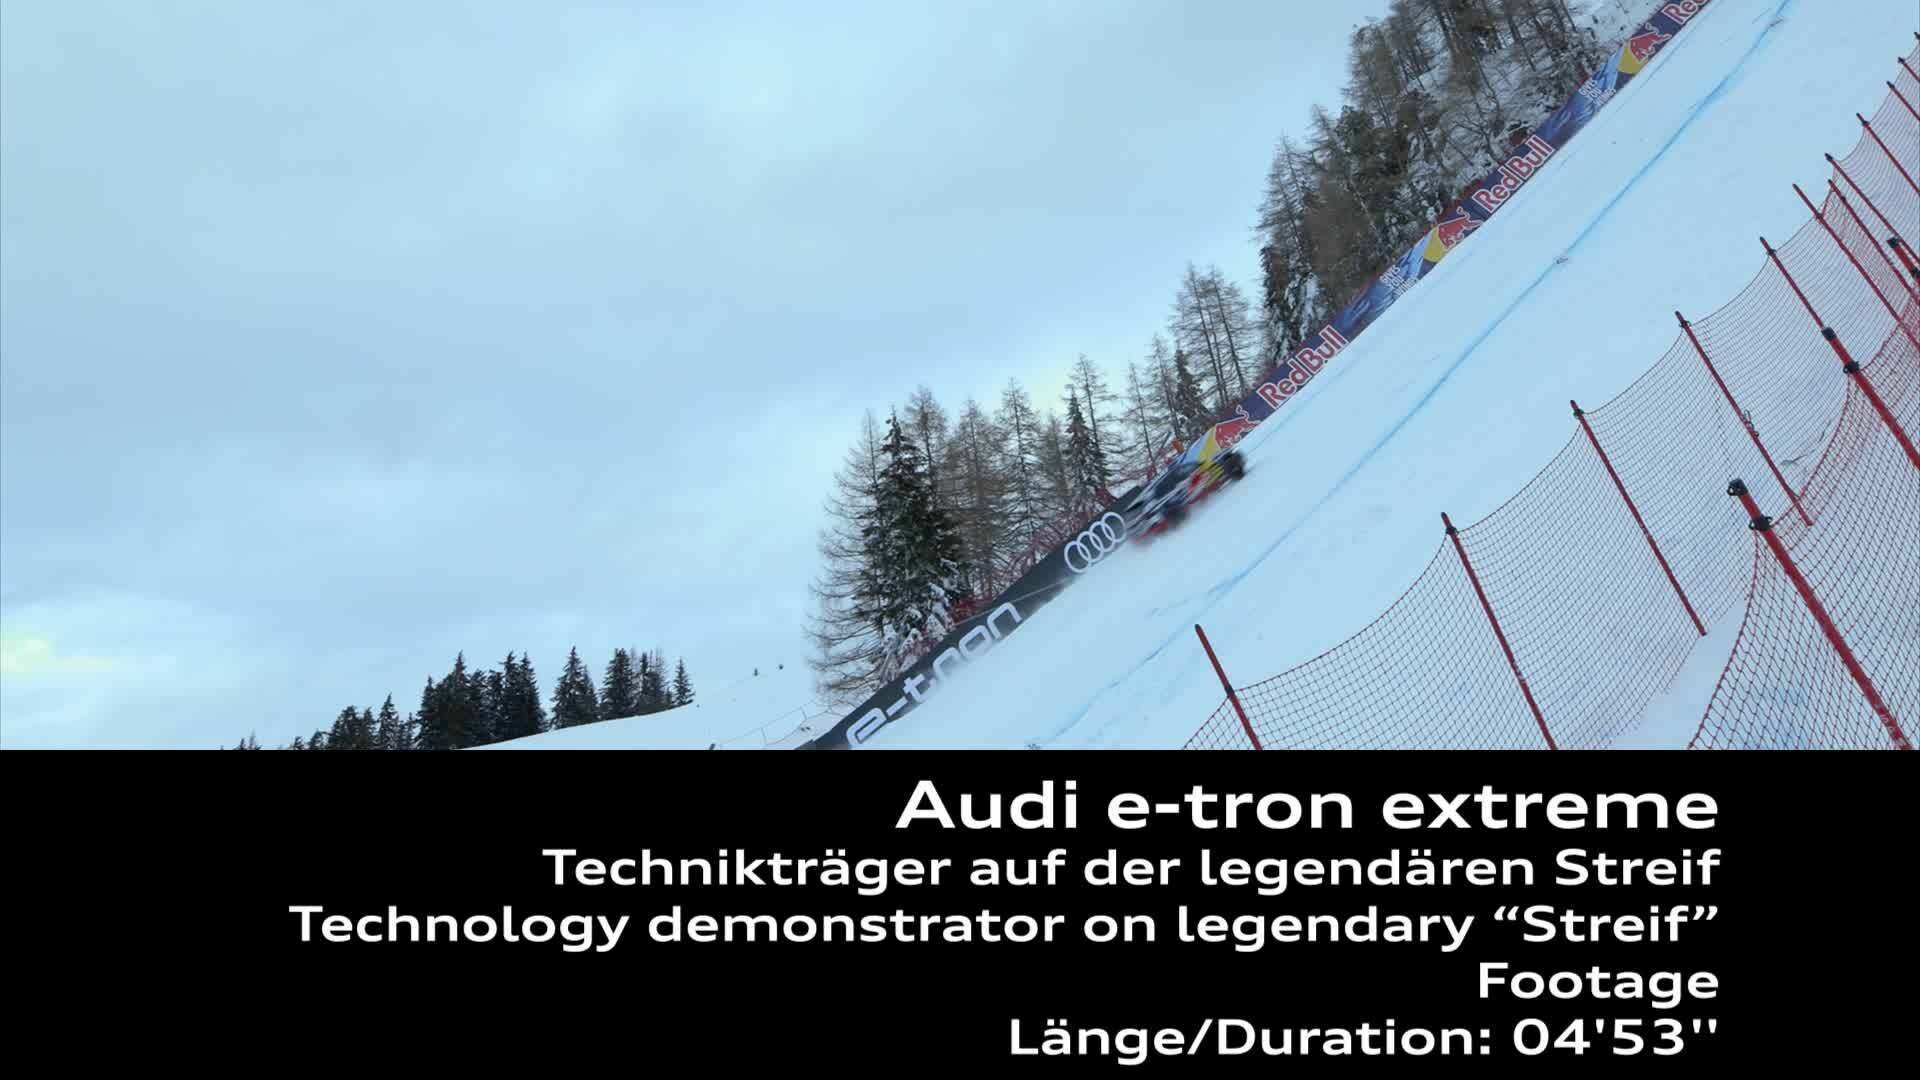 The Audi e-tron technology demonstrator on the legendary Streif (Footage)